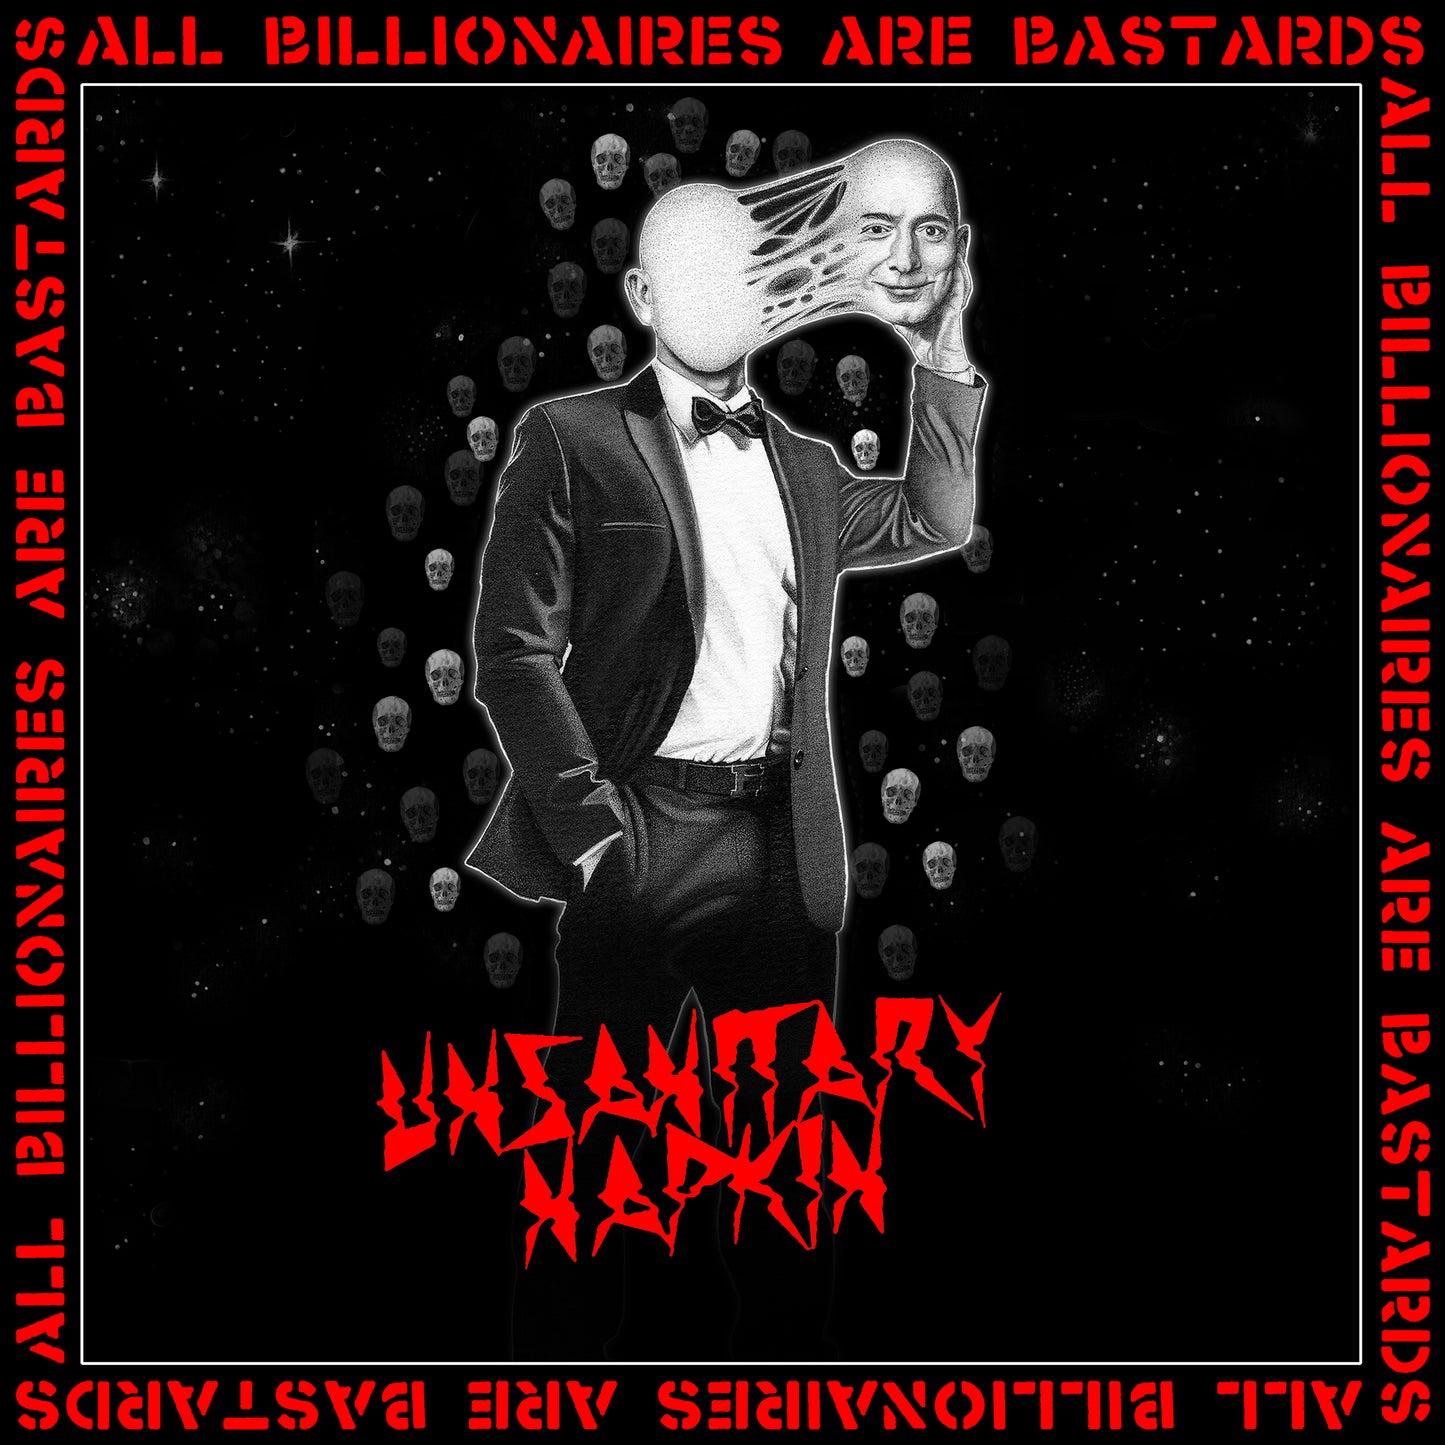 UNSANITARY NAPKIN - "ALL BILLIONAIRES ARE BASTARDS" LP